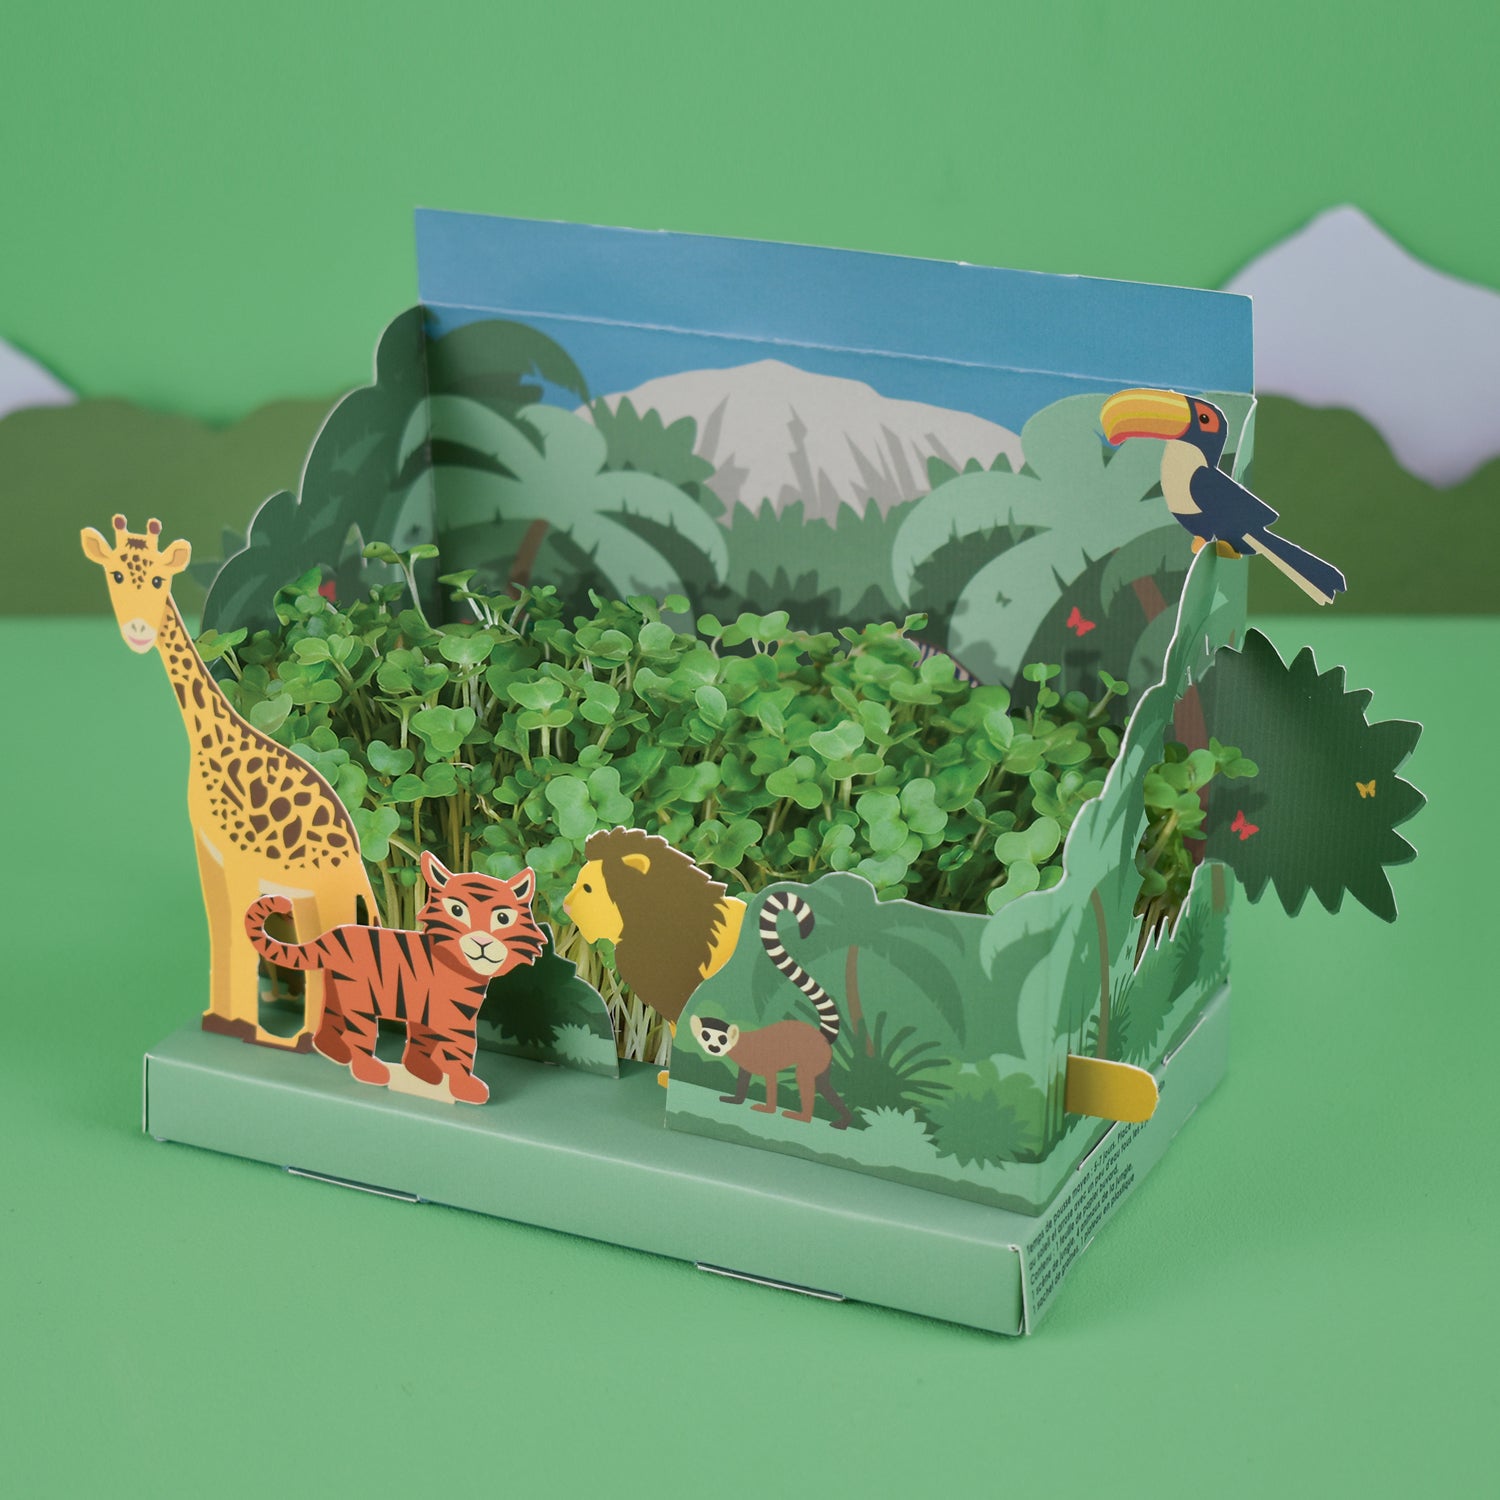 Grow Your Own Mini Jungle Garden